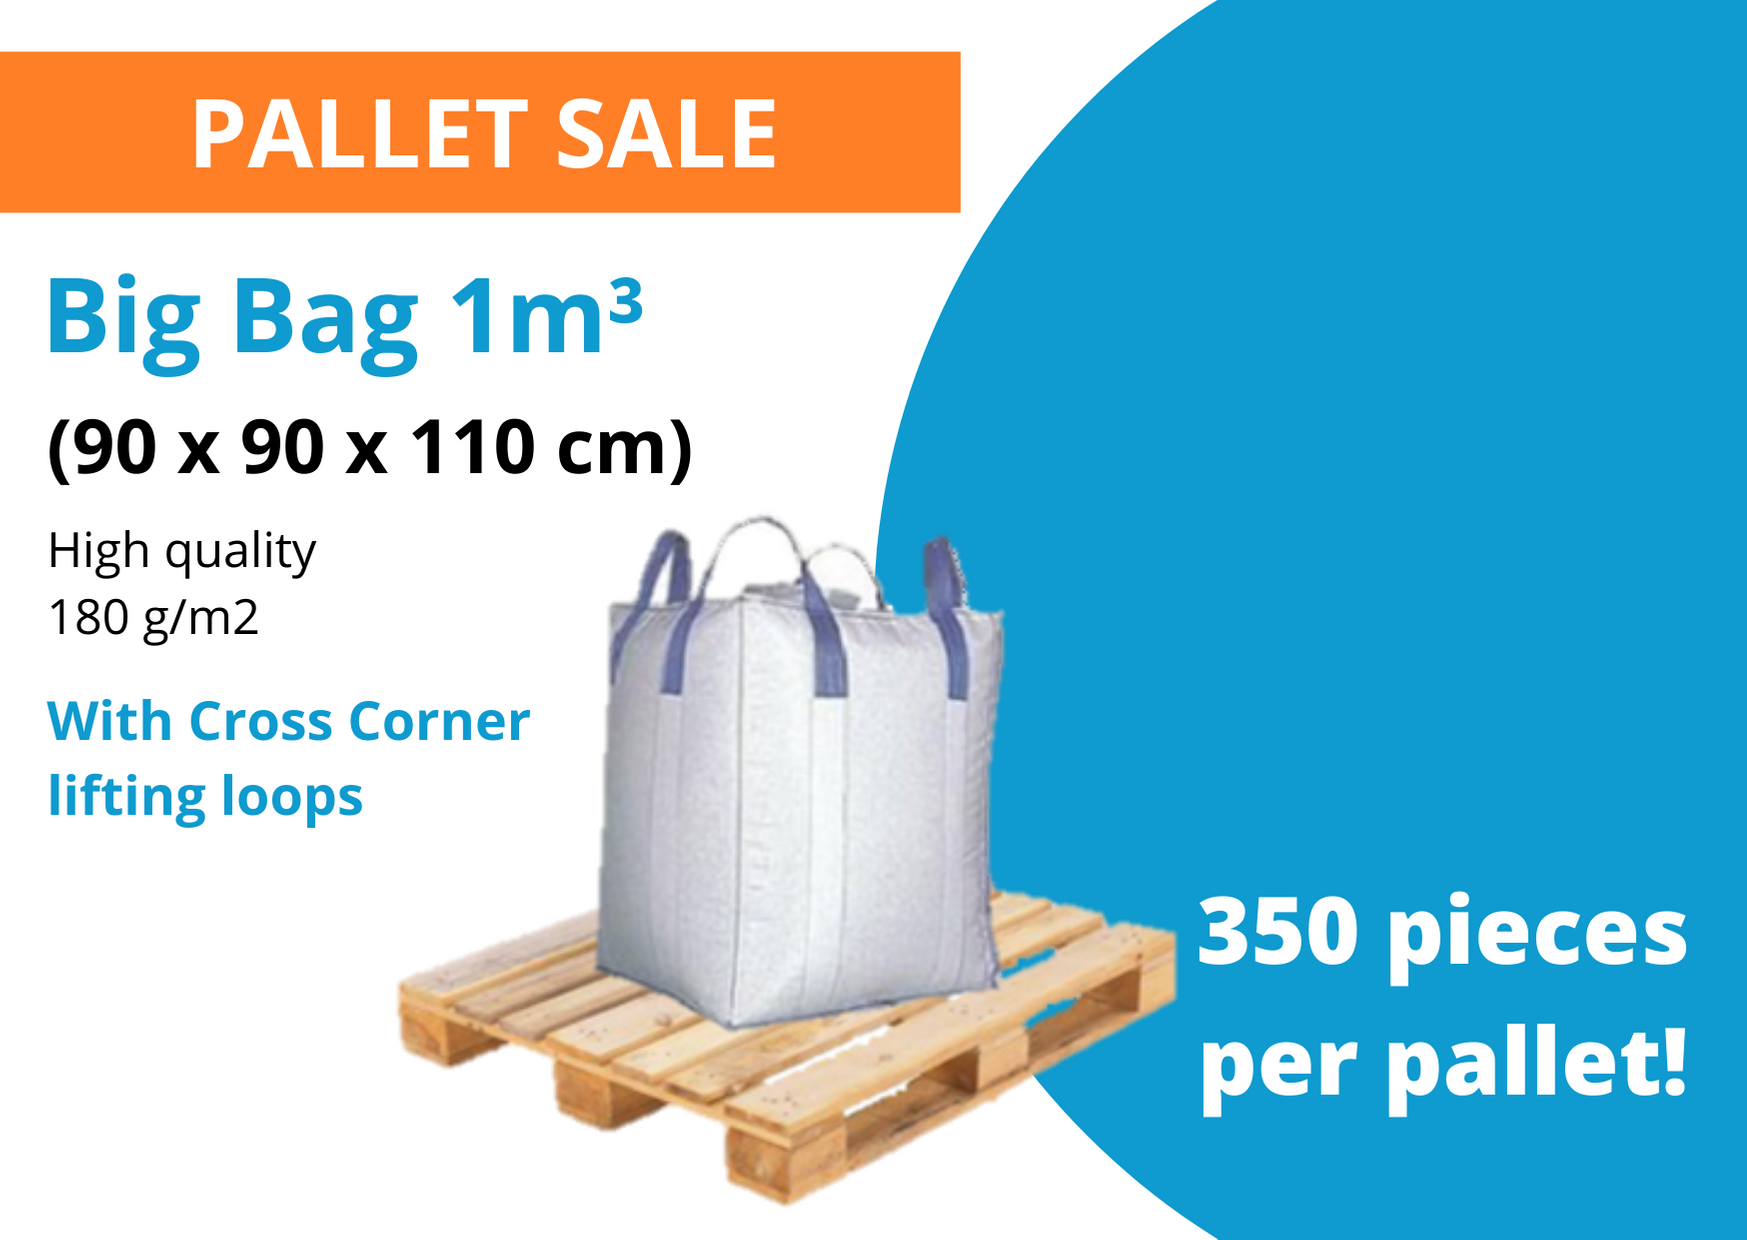 Big Bag 1m3 with lifting loops pallet sale